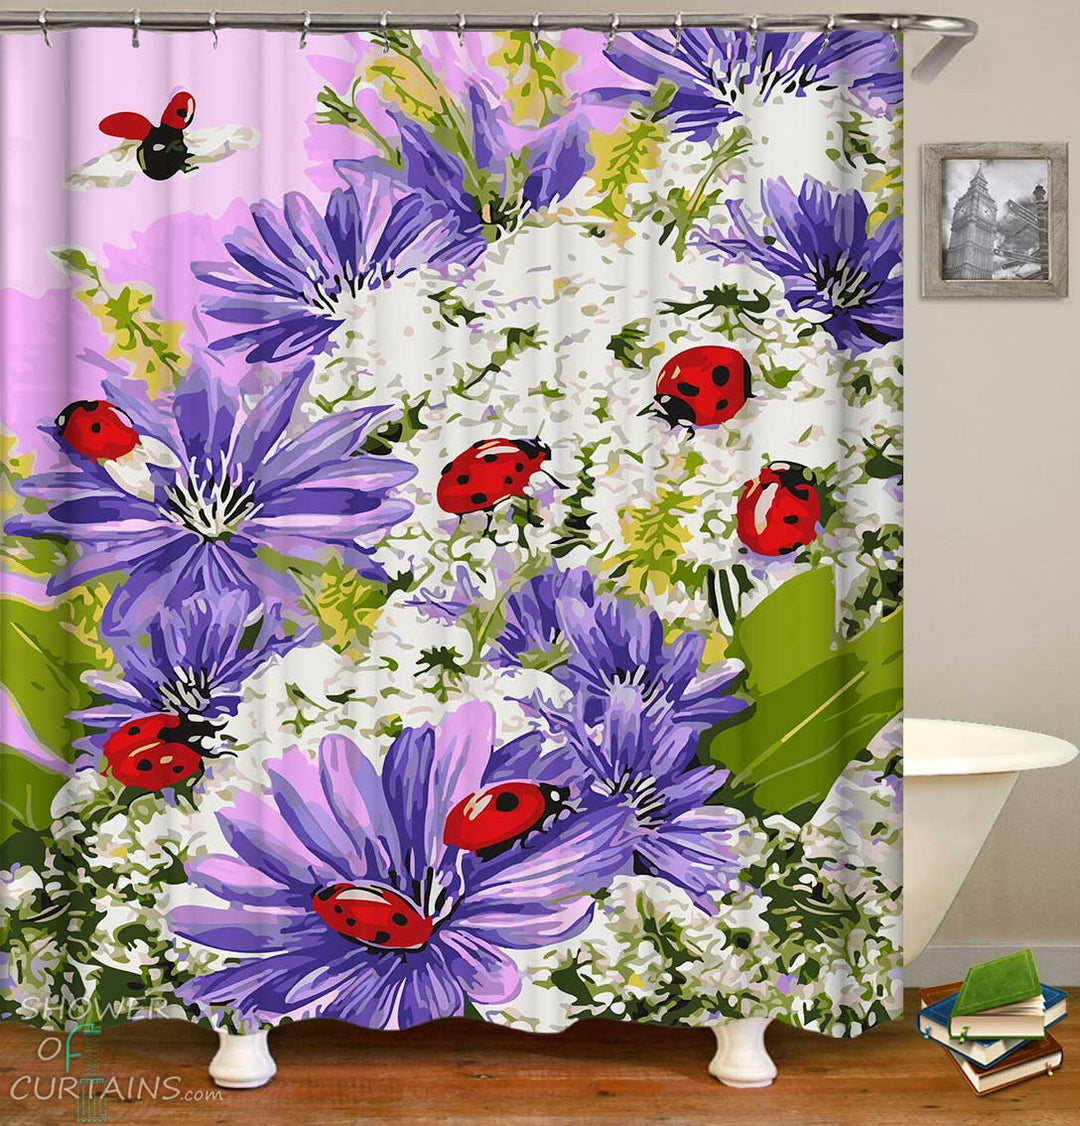 Shower Curtains with Ladybugs on Purplish and White Flowers